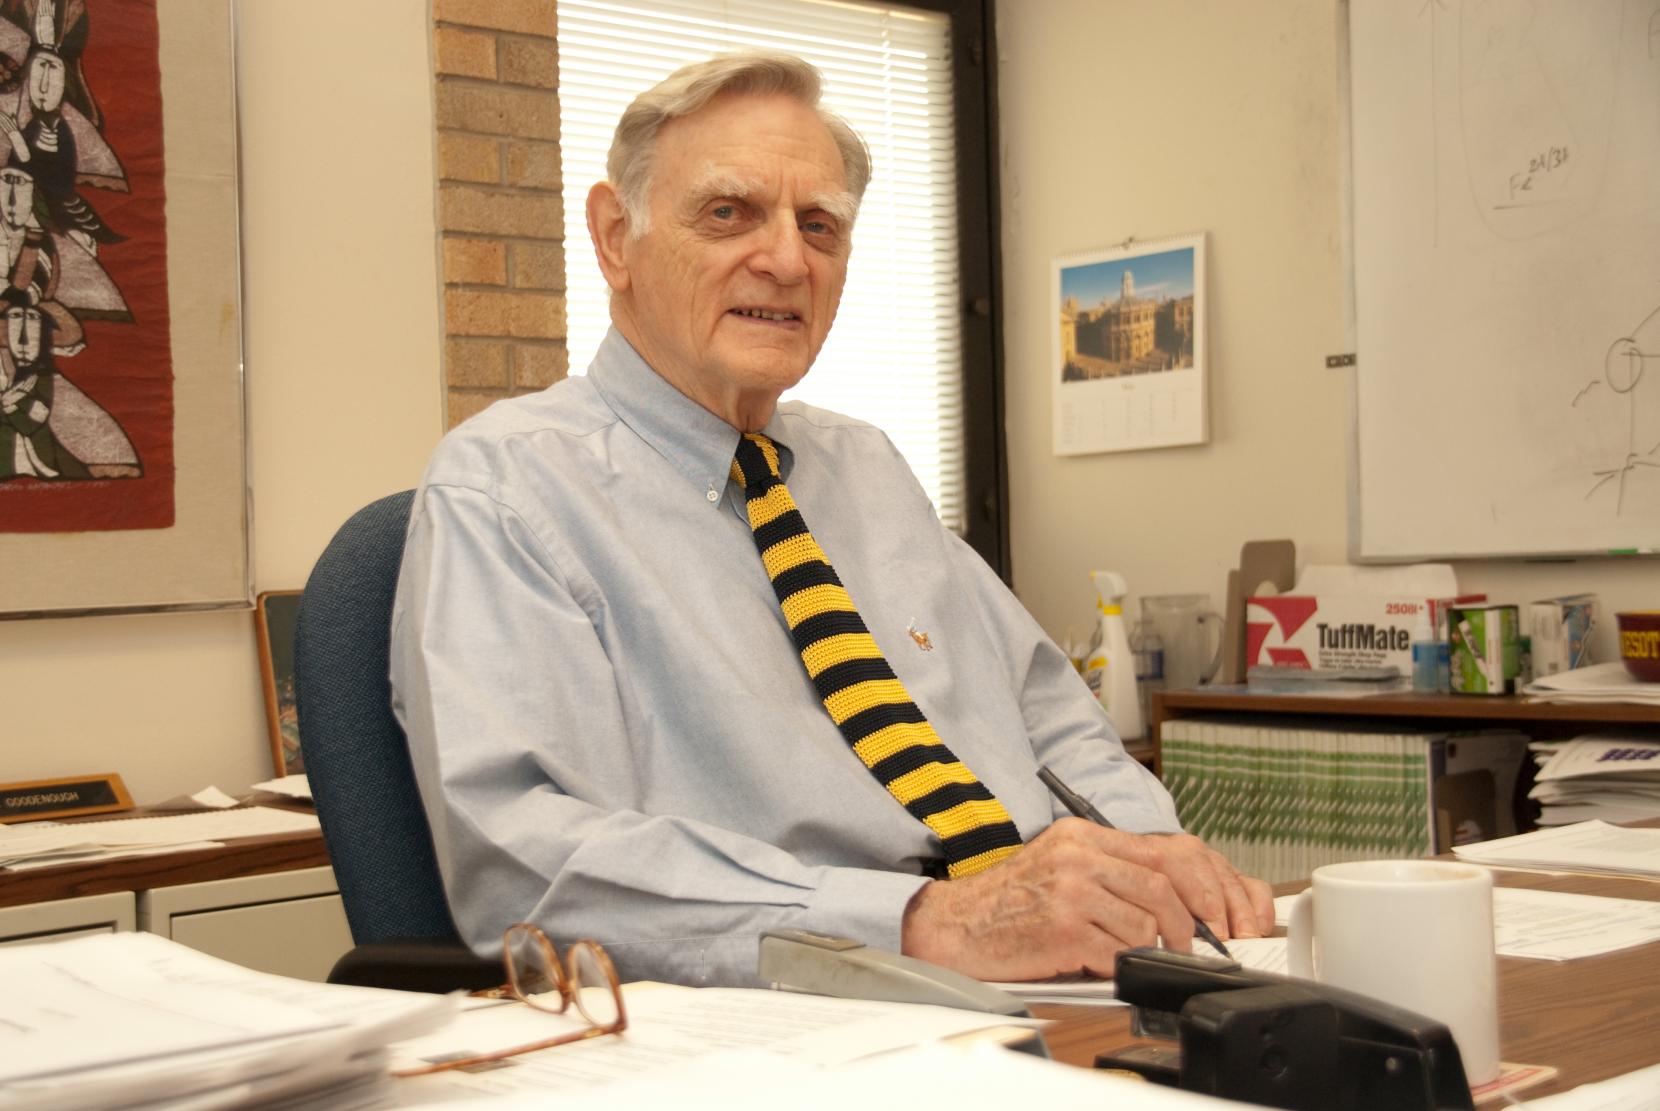 John Goodenough poses at his desk holding a pen and looking at the camera smiling